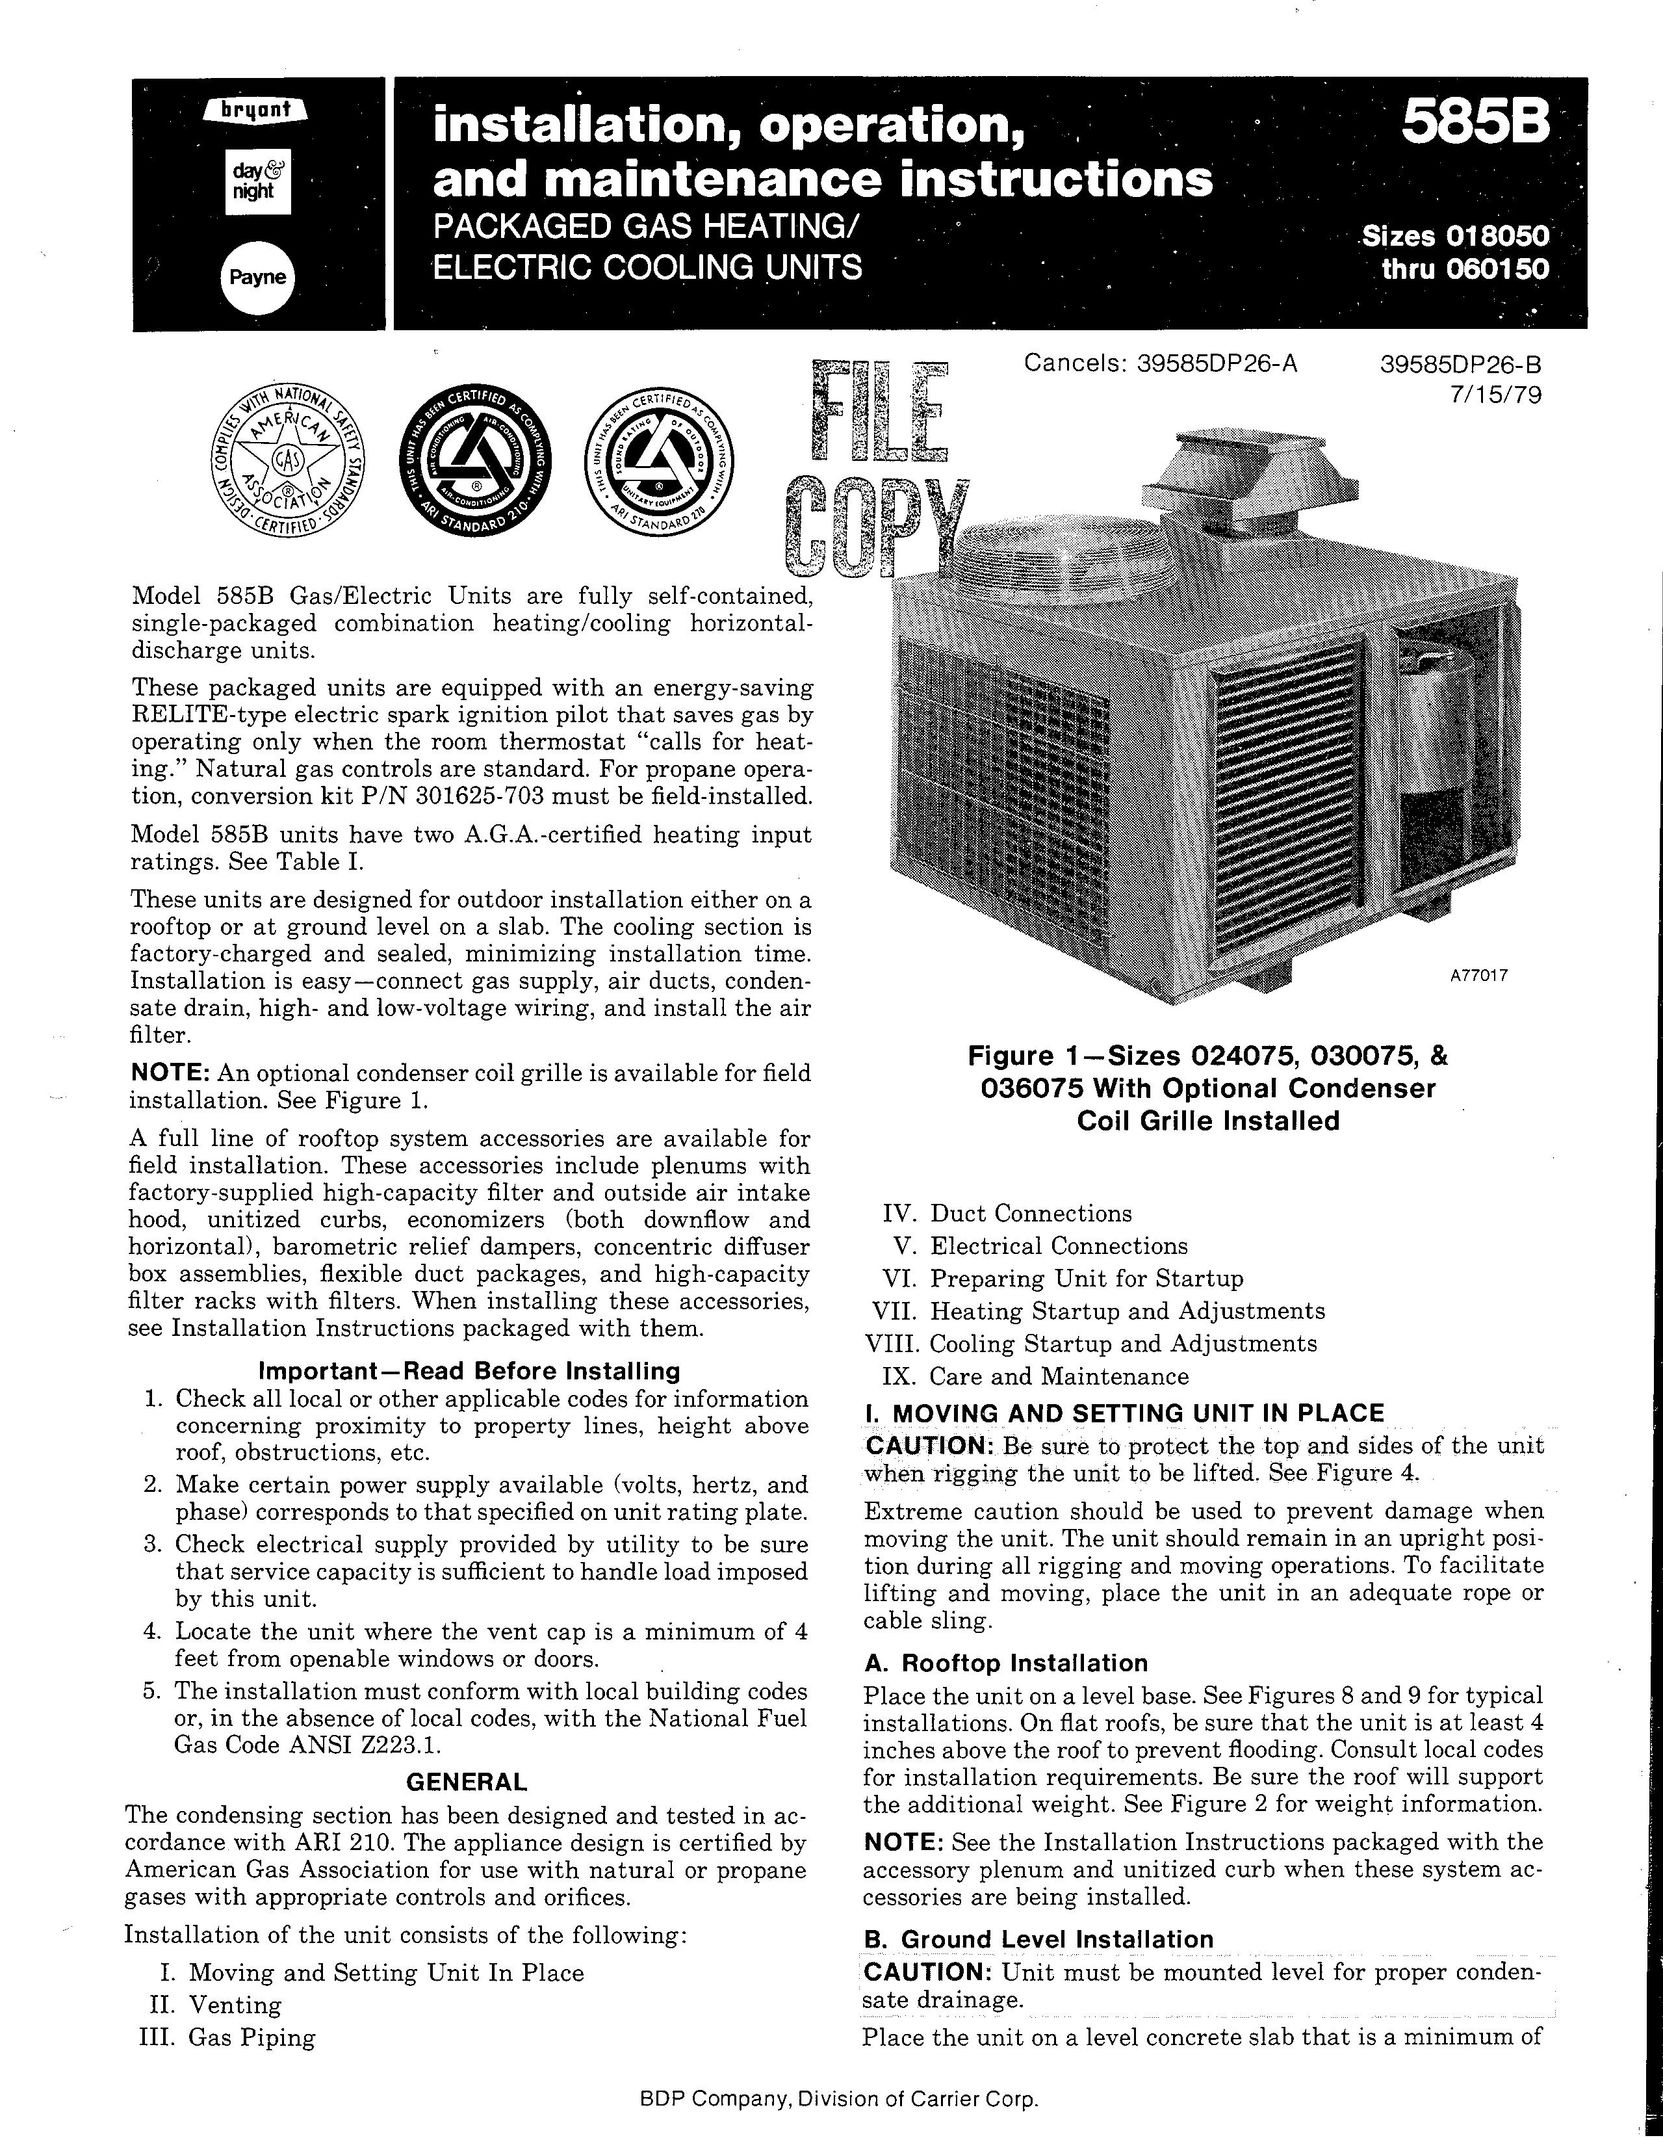 Bryant 585B Gas Heater User Manual